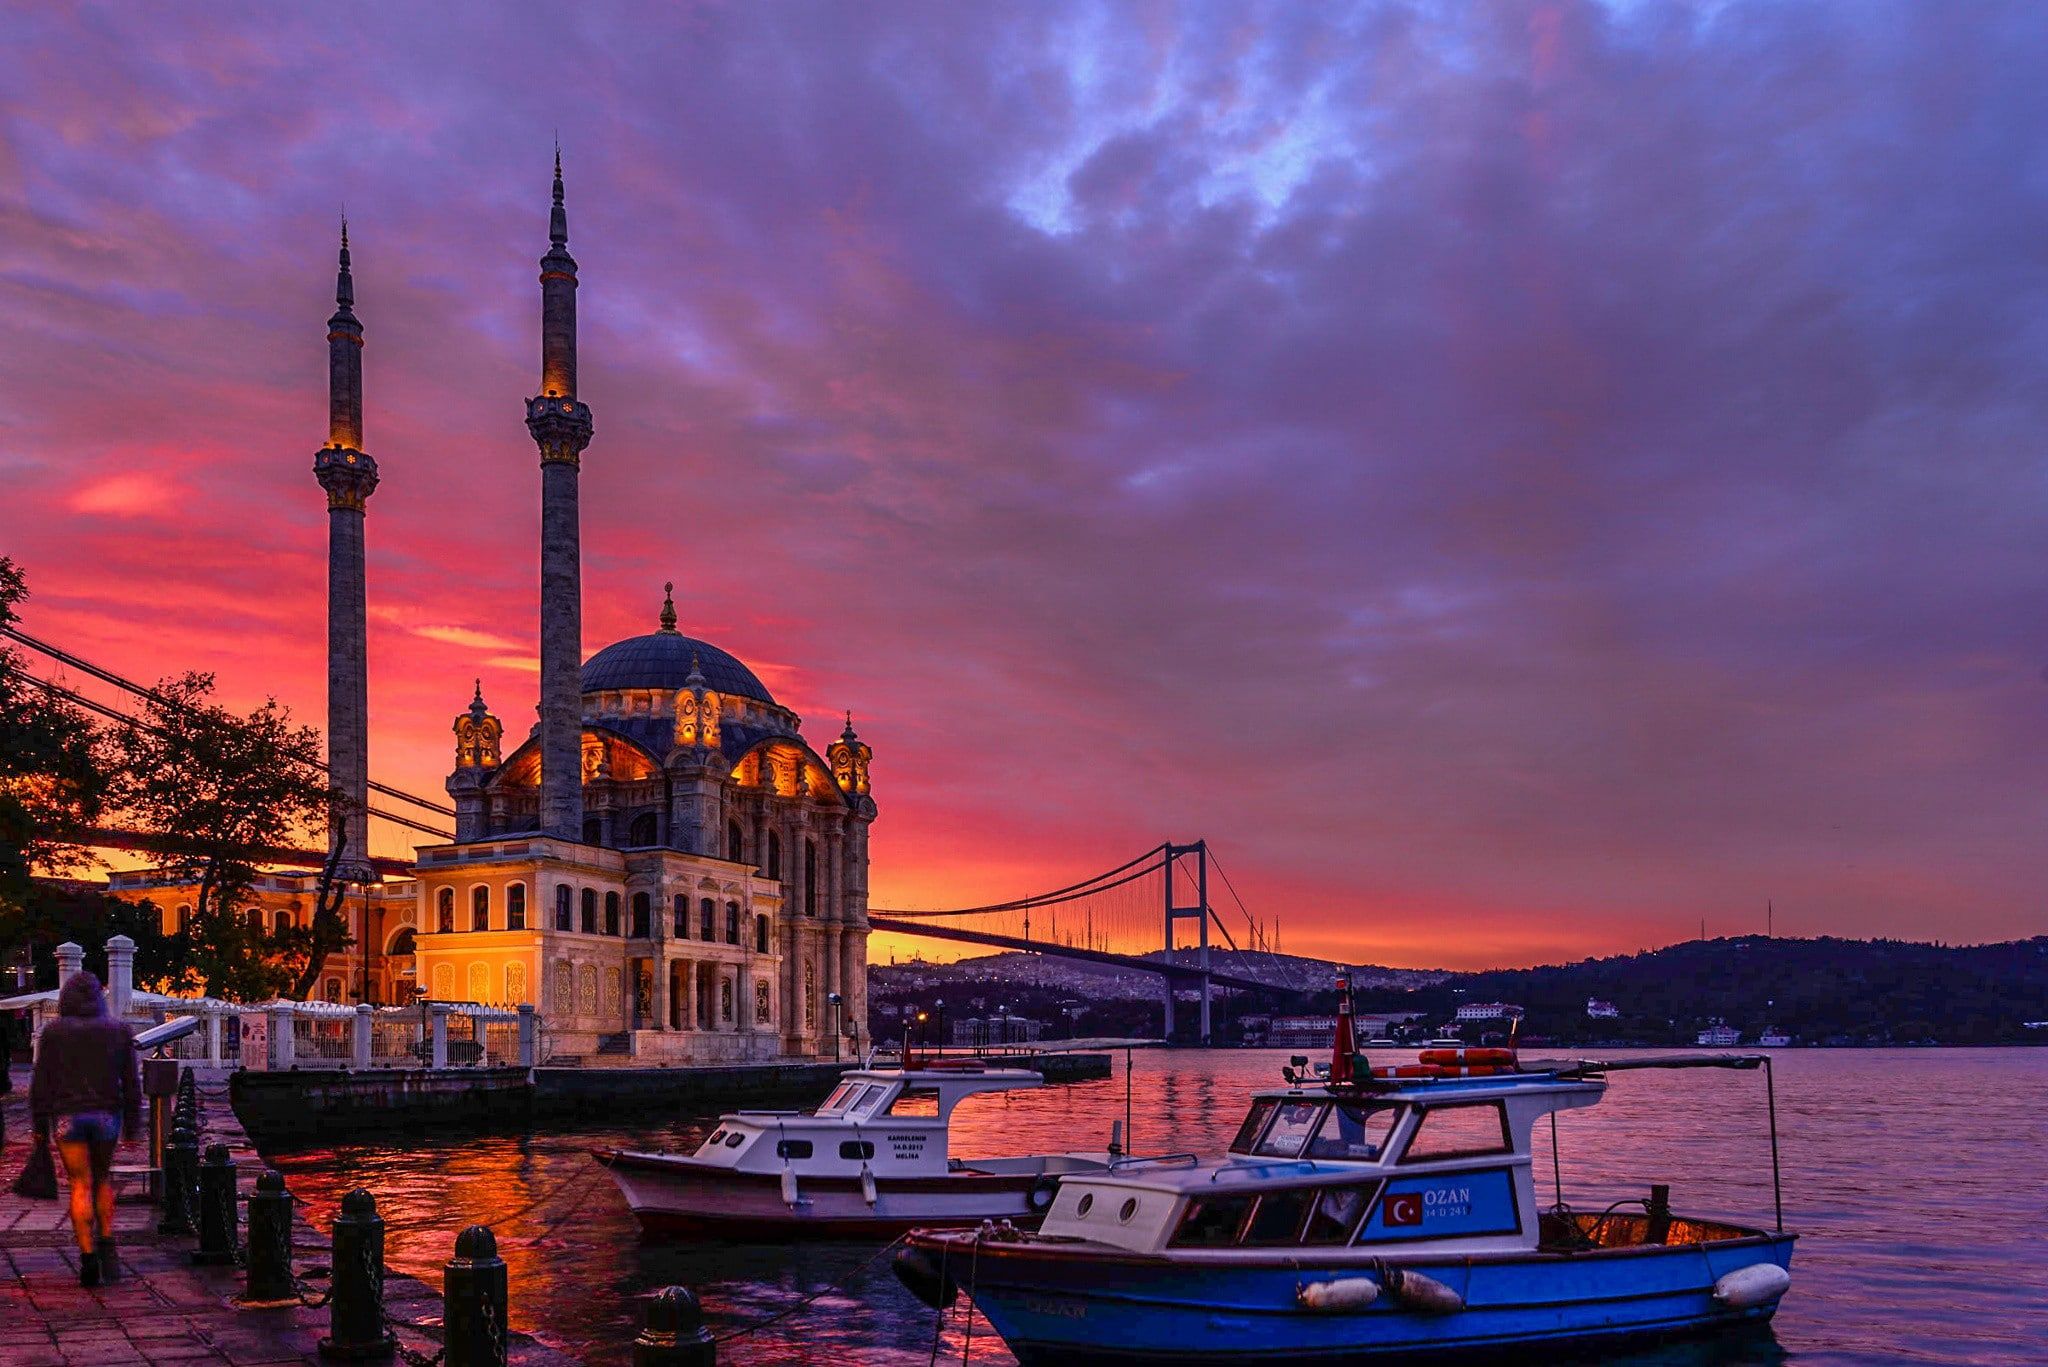 Morning in Istanbul Bosphorus bridge Ortakoy Mosque #architecture #boat #bridge #city #colors #goodmorning #Istan. Bosphorus bridge, Istanbul, Mosque architecture